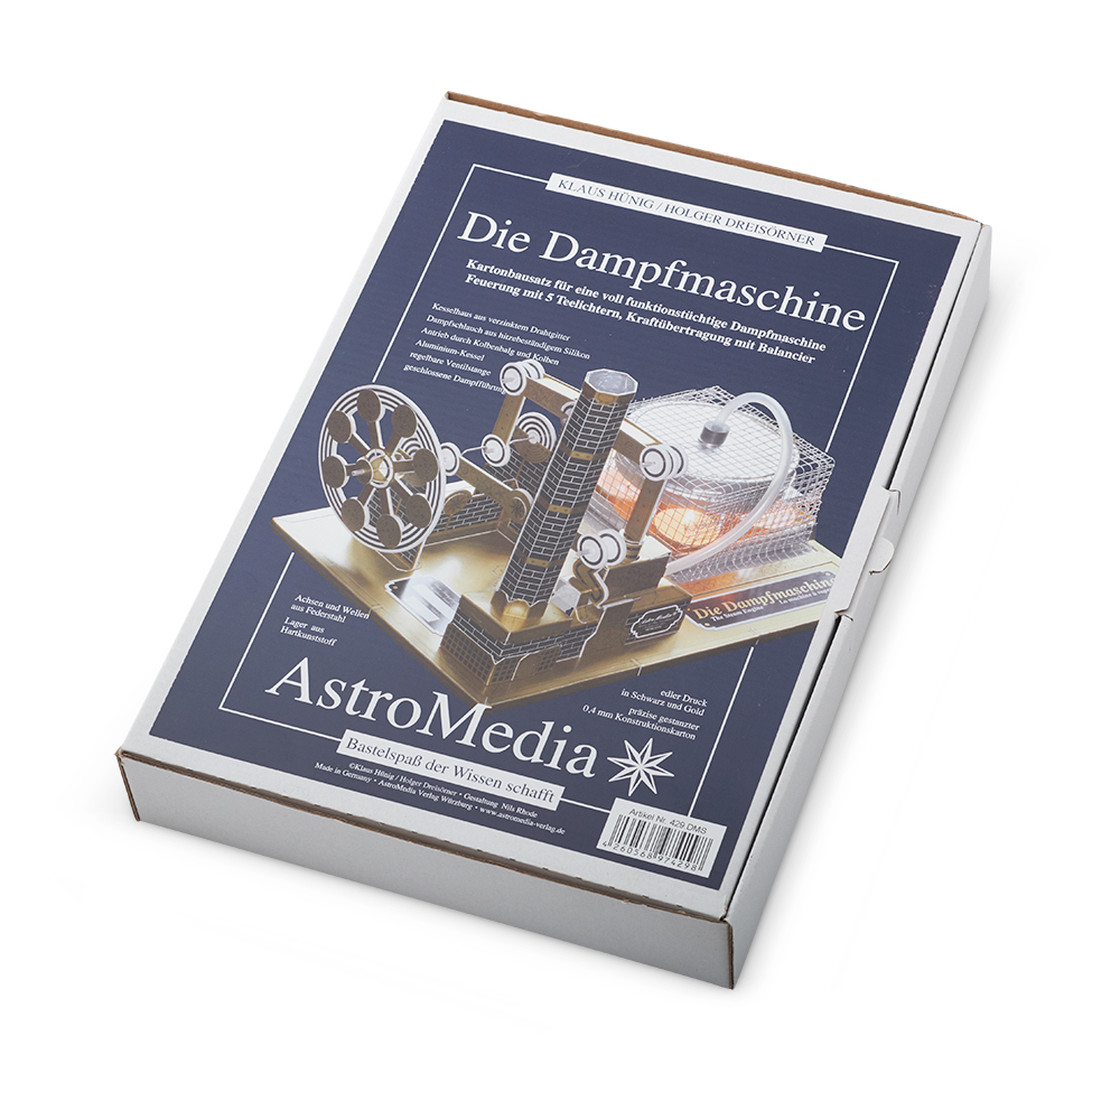 La machine à vapeur - AstroMedia